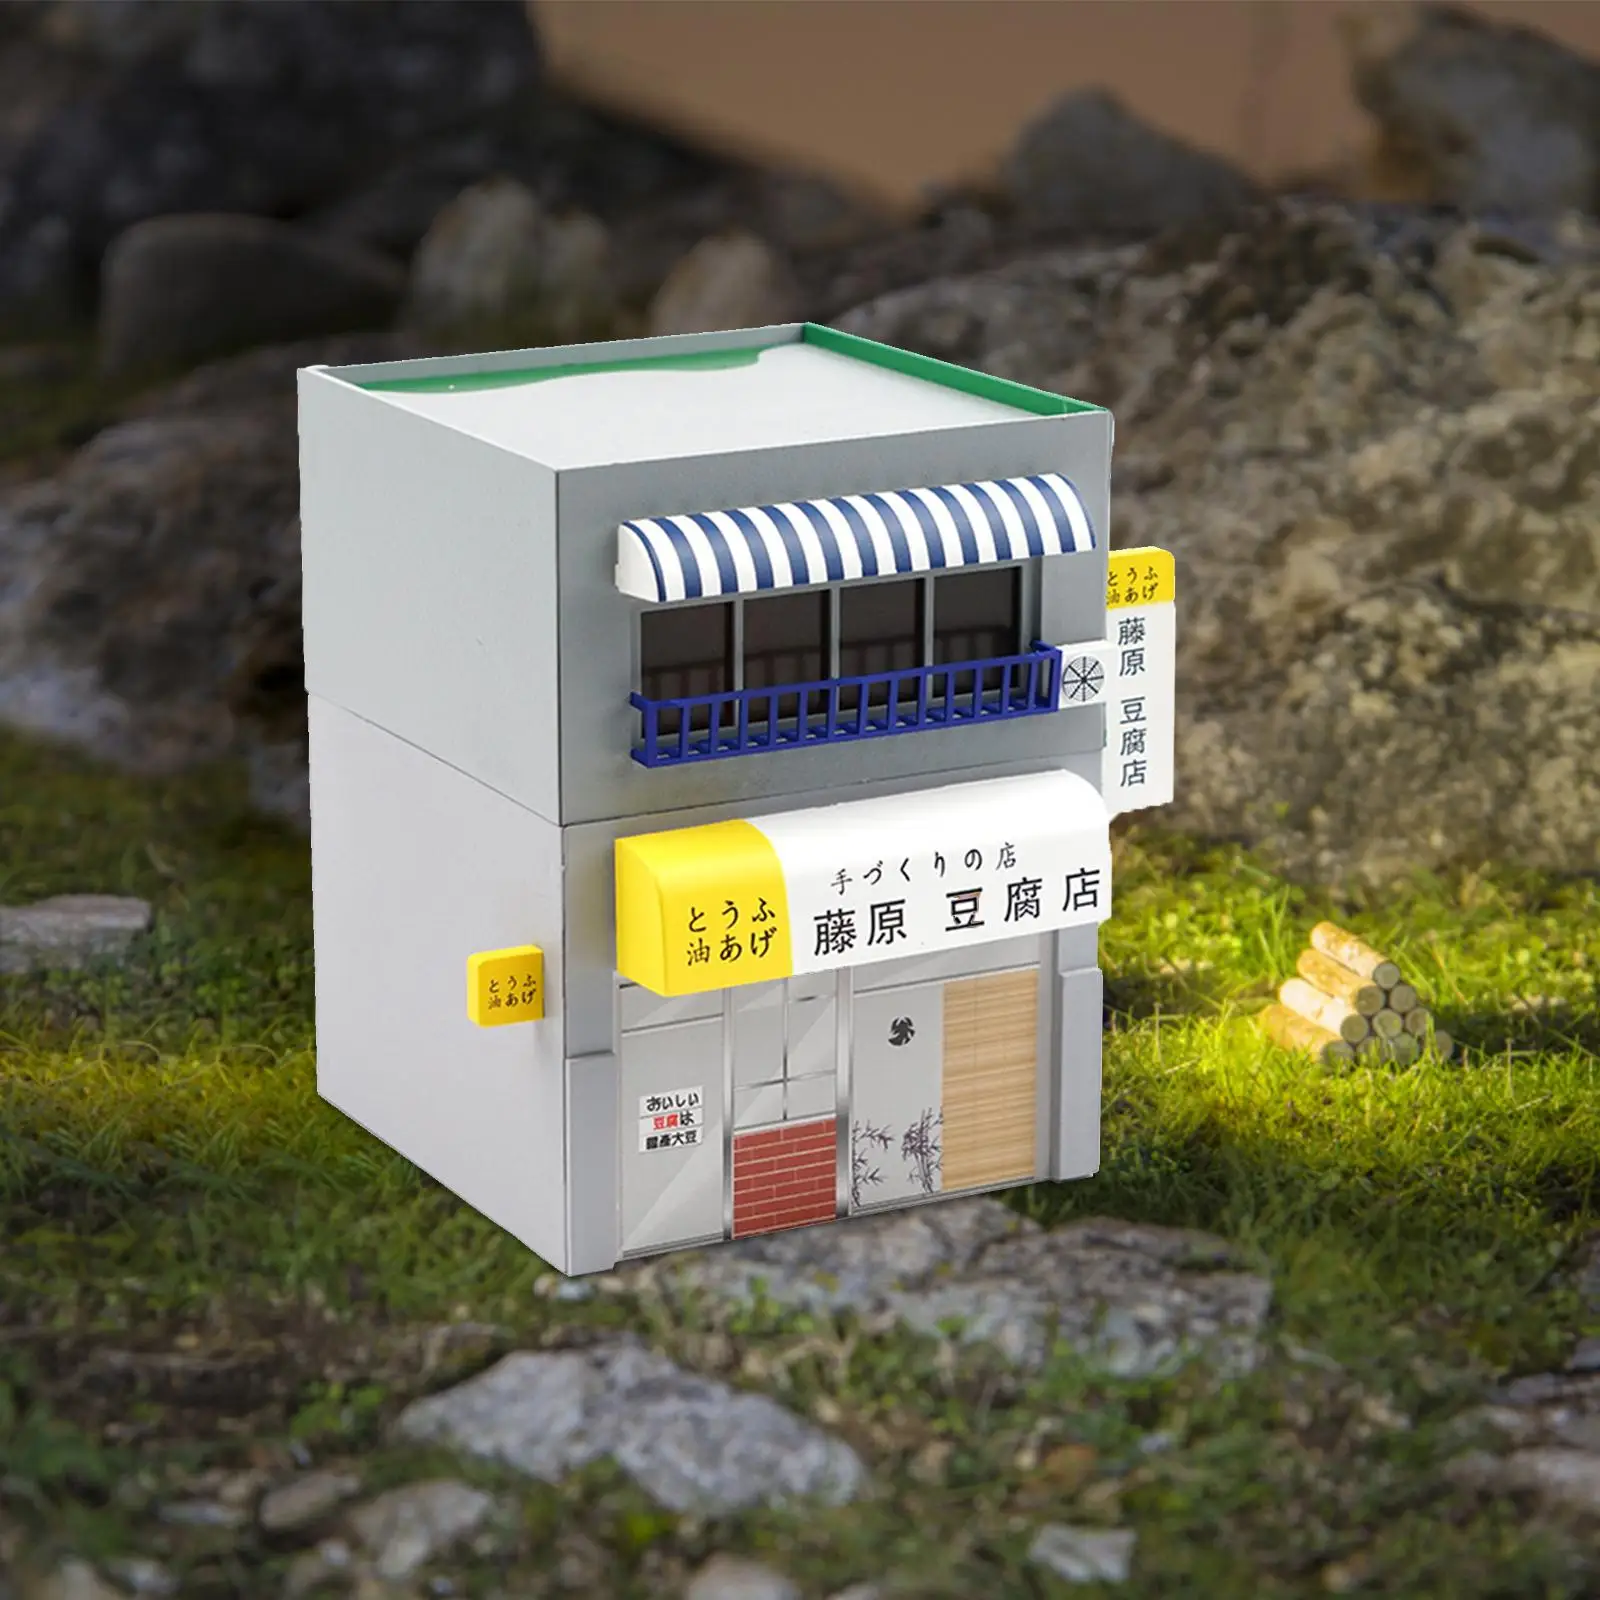 1:64 Scale Tofu Shop Diorama Model Movie Props Micro Landscape Architectural S Scale Scenery Store Layout DIY Projects Decor